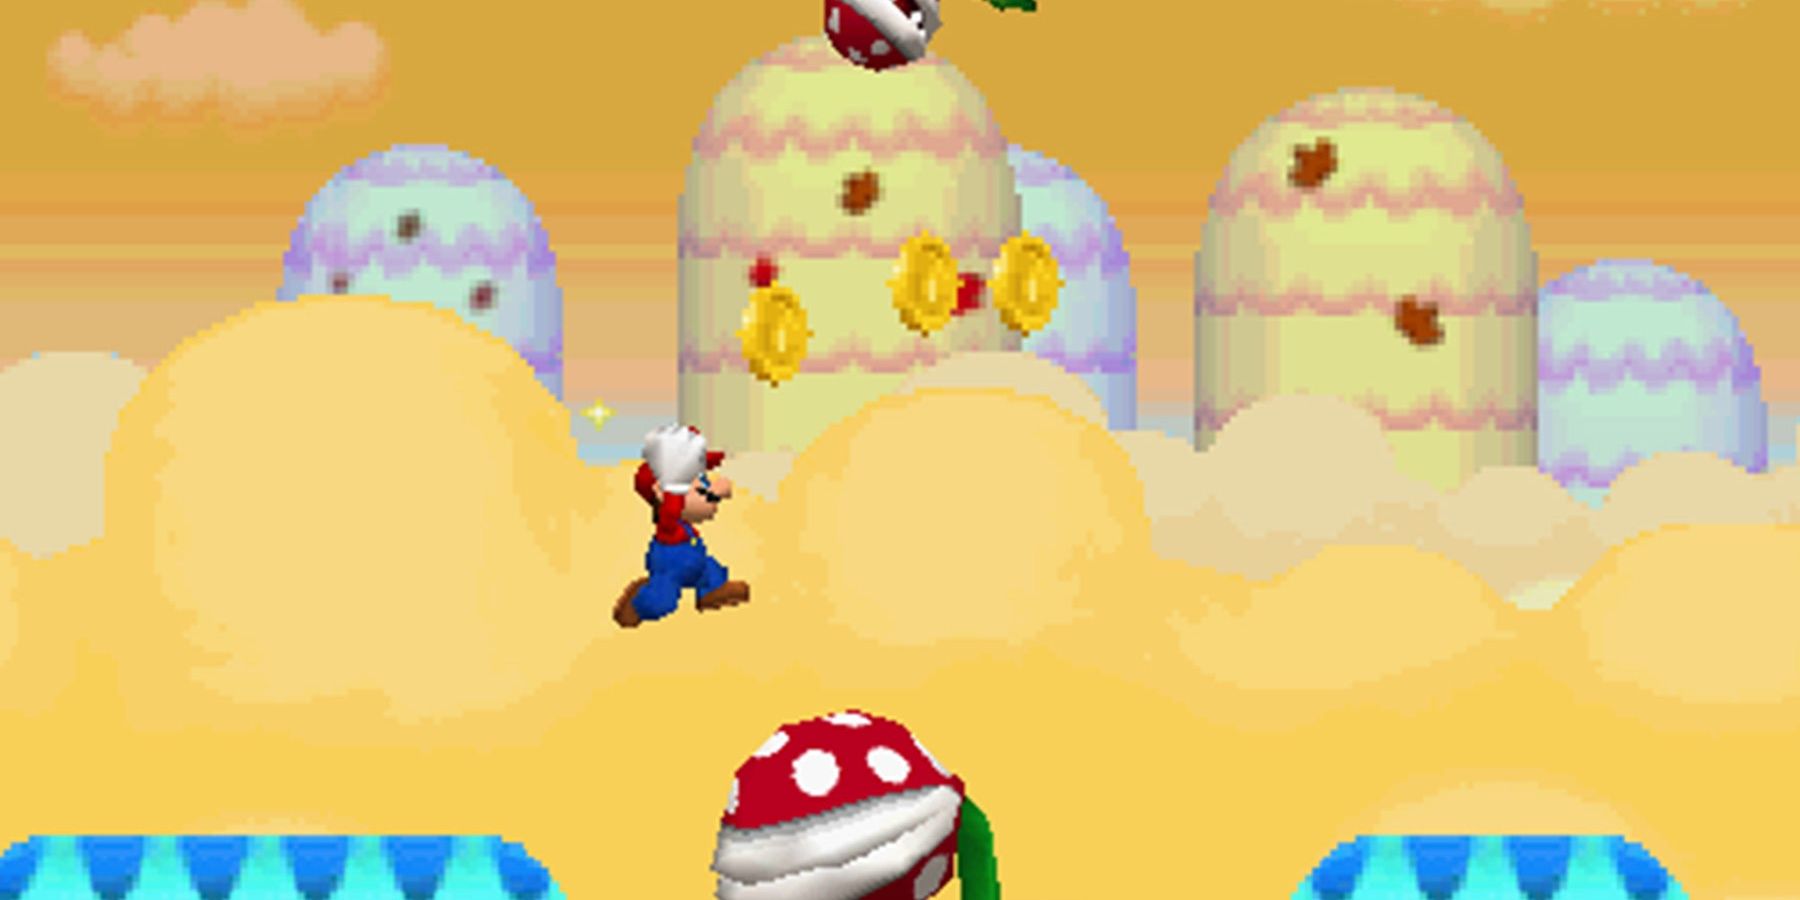 Mario leaps over a Piranha Plant in New Super Mario Bros.